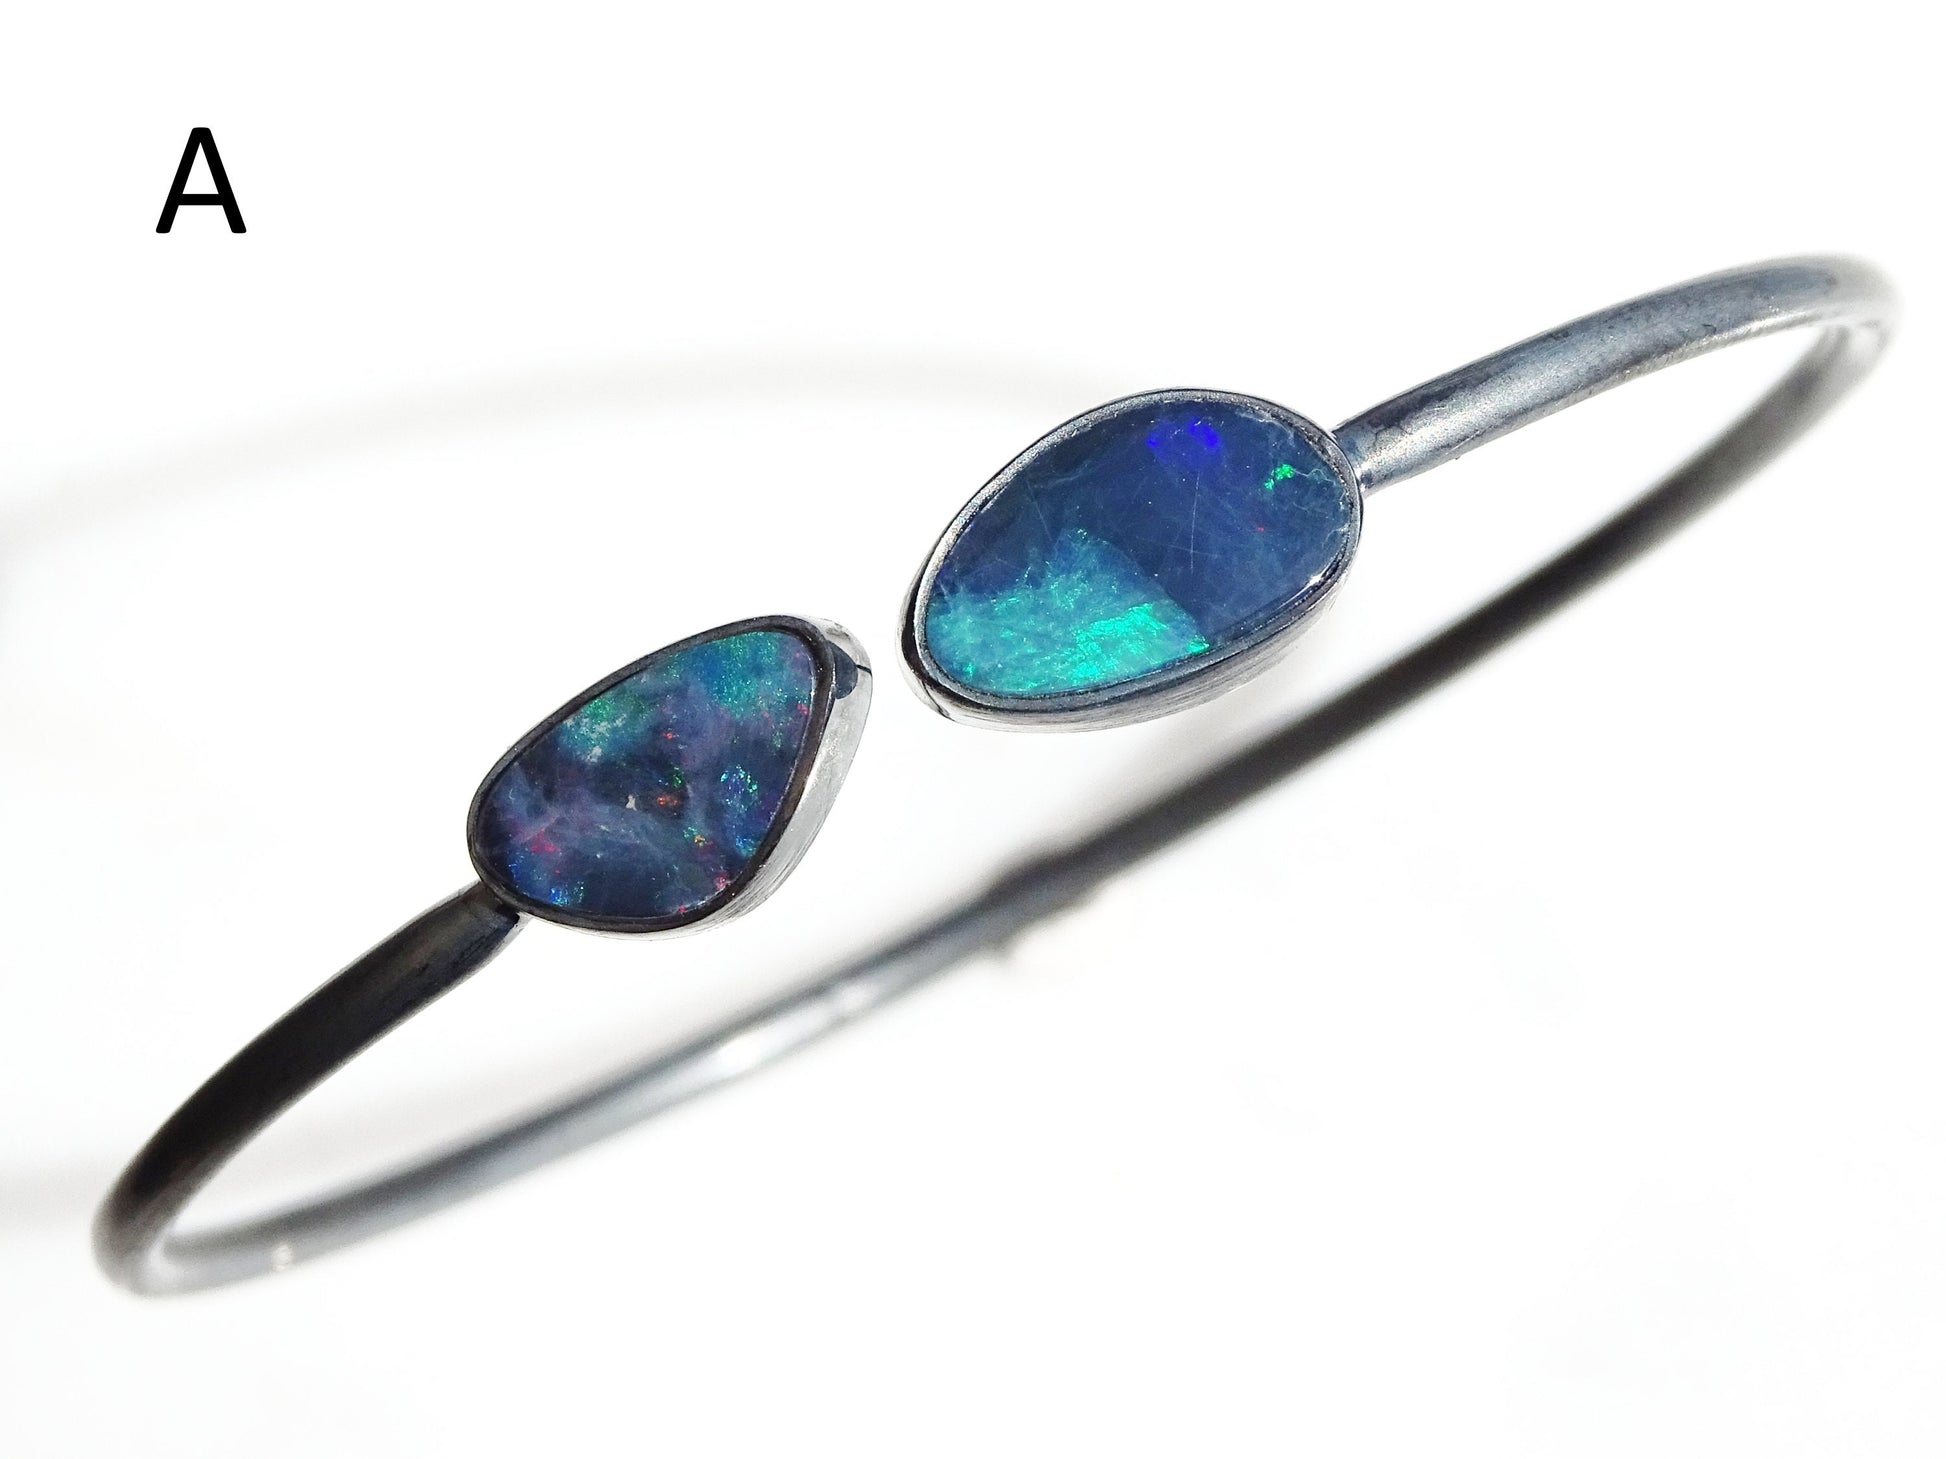 dainty opal bracelet black silver opal cuff bracelet, stacking bangle silver opal bangle, Australian opal jewelry, unique gift for wife - CrazyAss Jewelry Designs